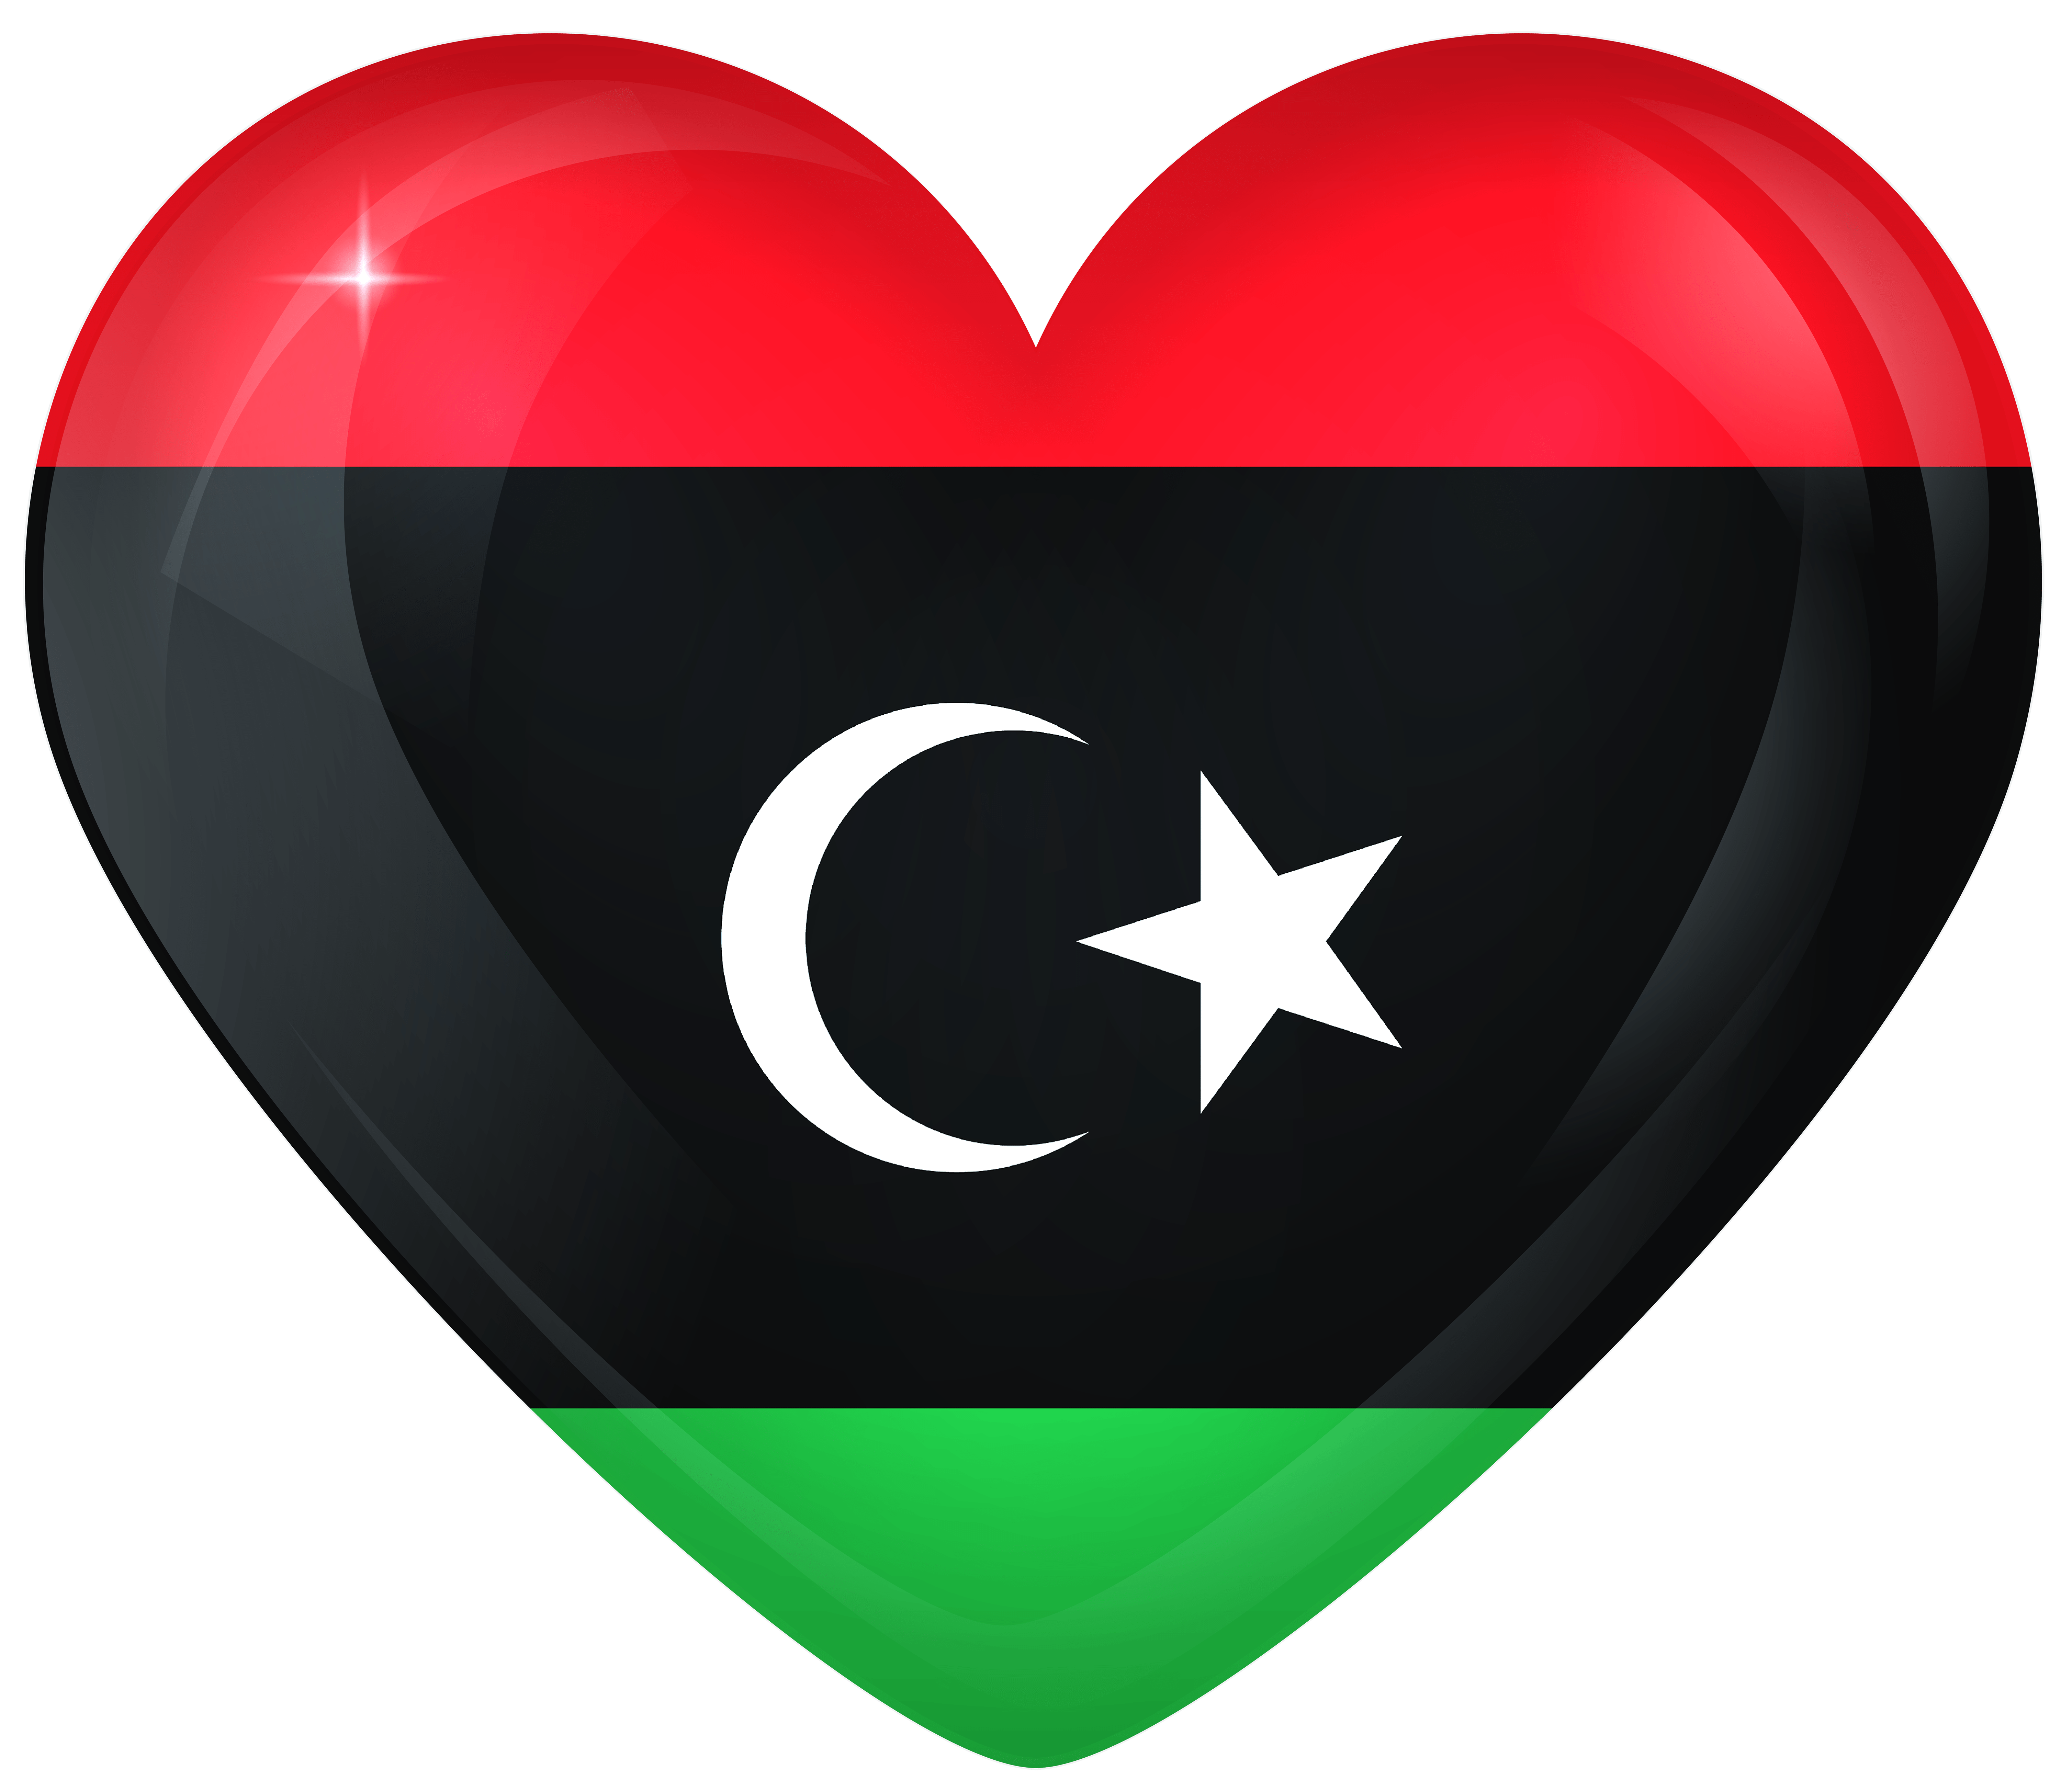 Libya Large Heart Flag